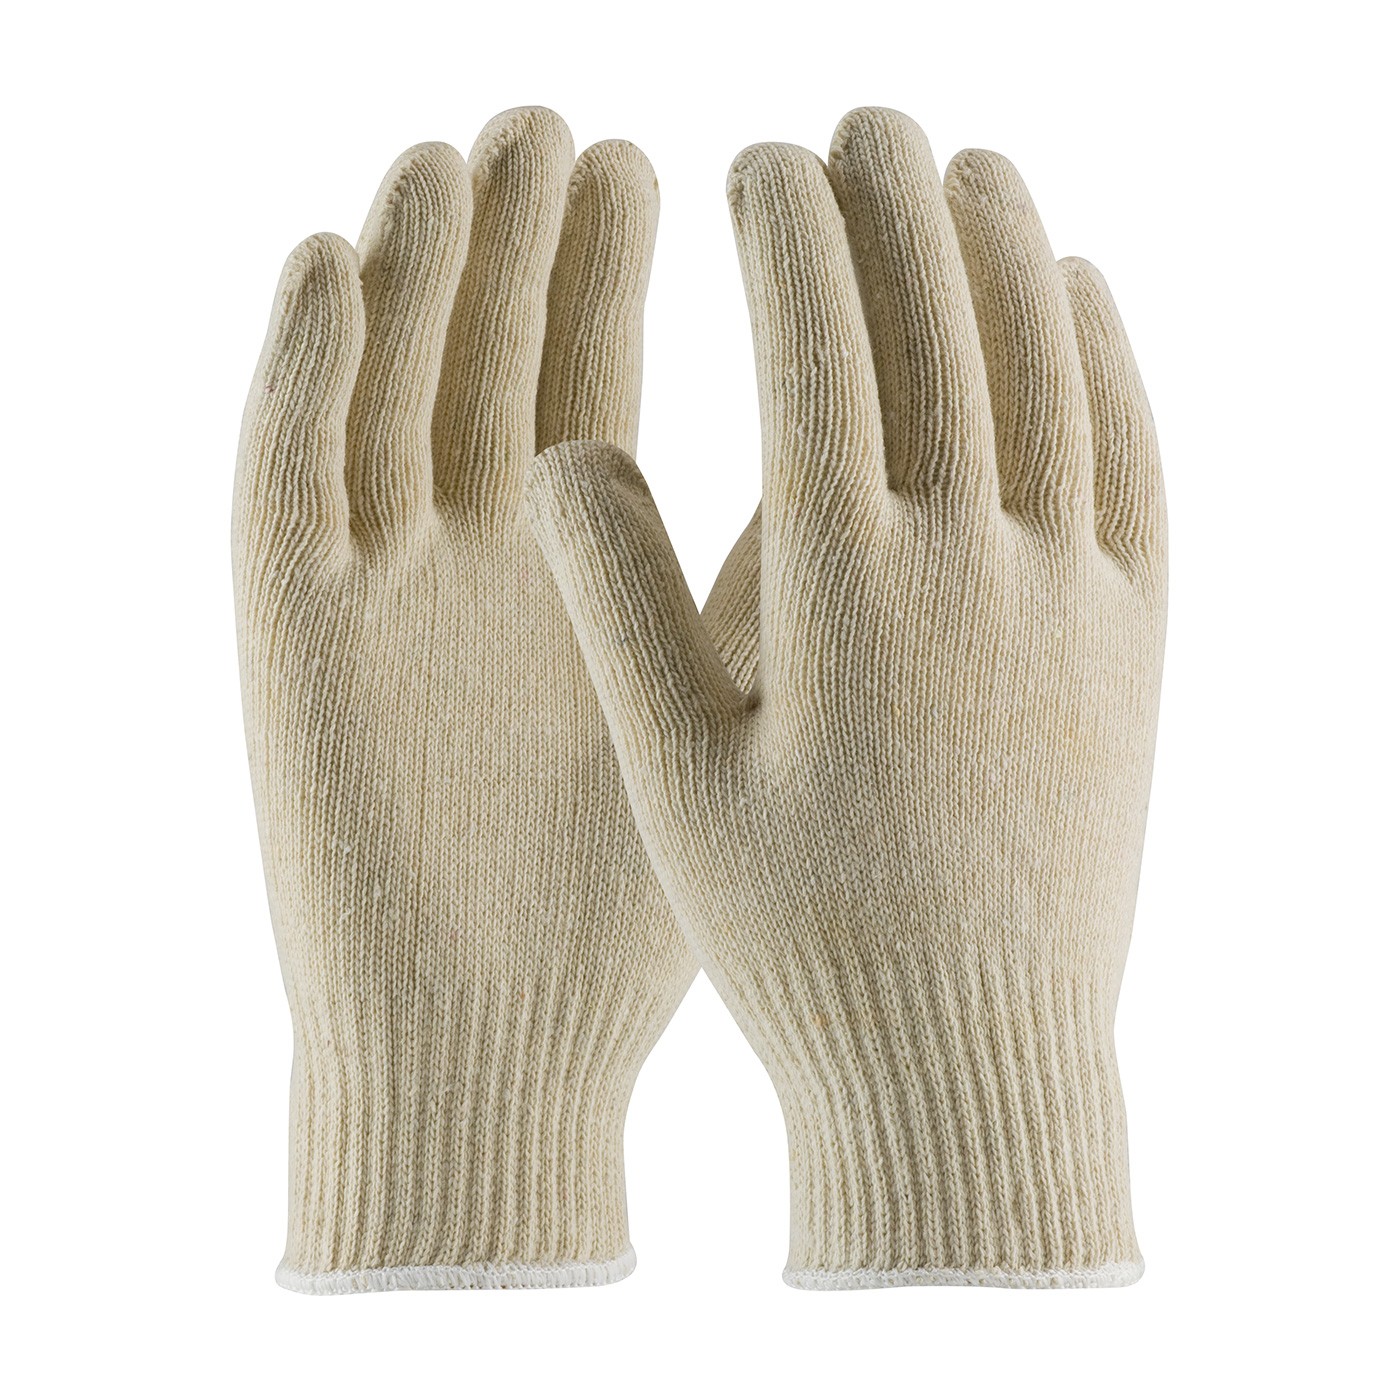 PIP® Premium Seamless Knit Cotton / Polyester Glove - 10 Gauge  (#K7100S)